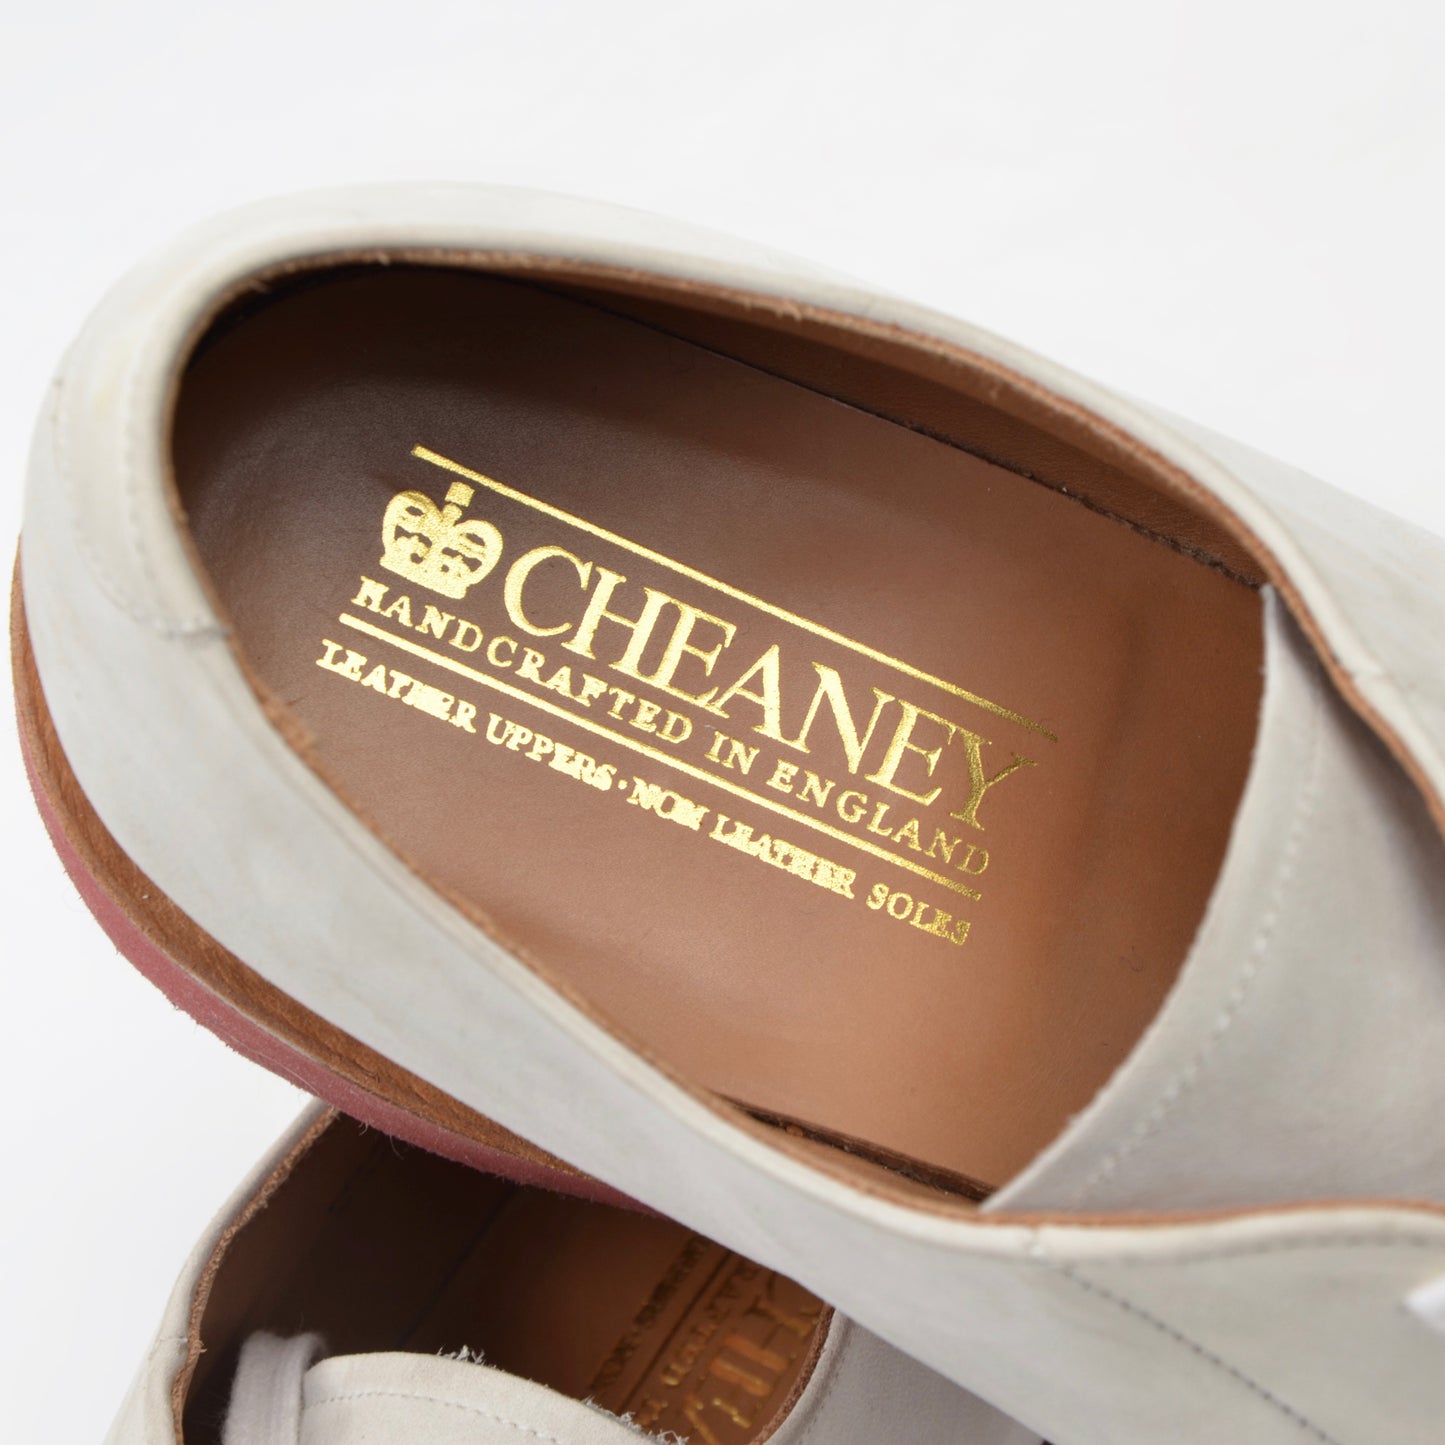 Cheaney of England Classic White Bucks Schuhe Größe 8.5F - Weiß